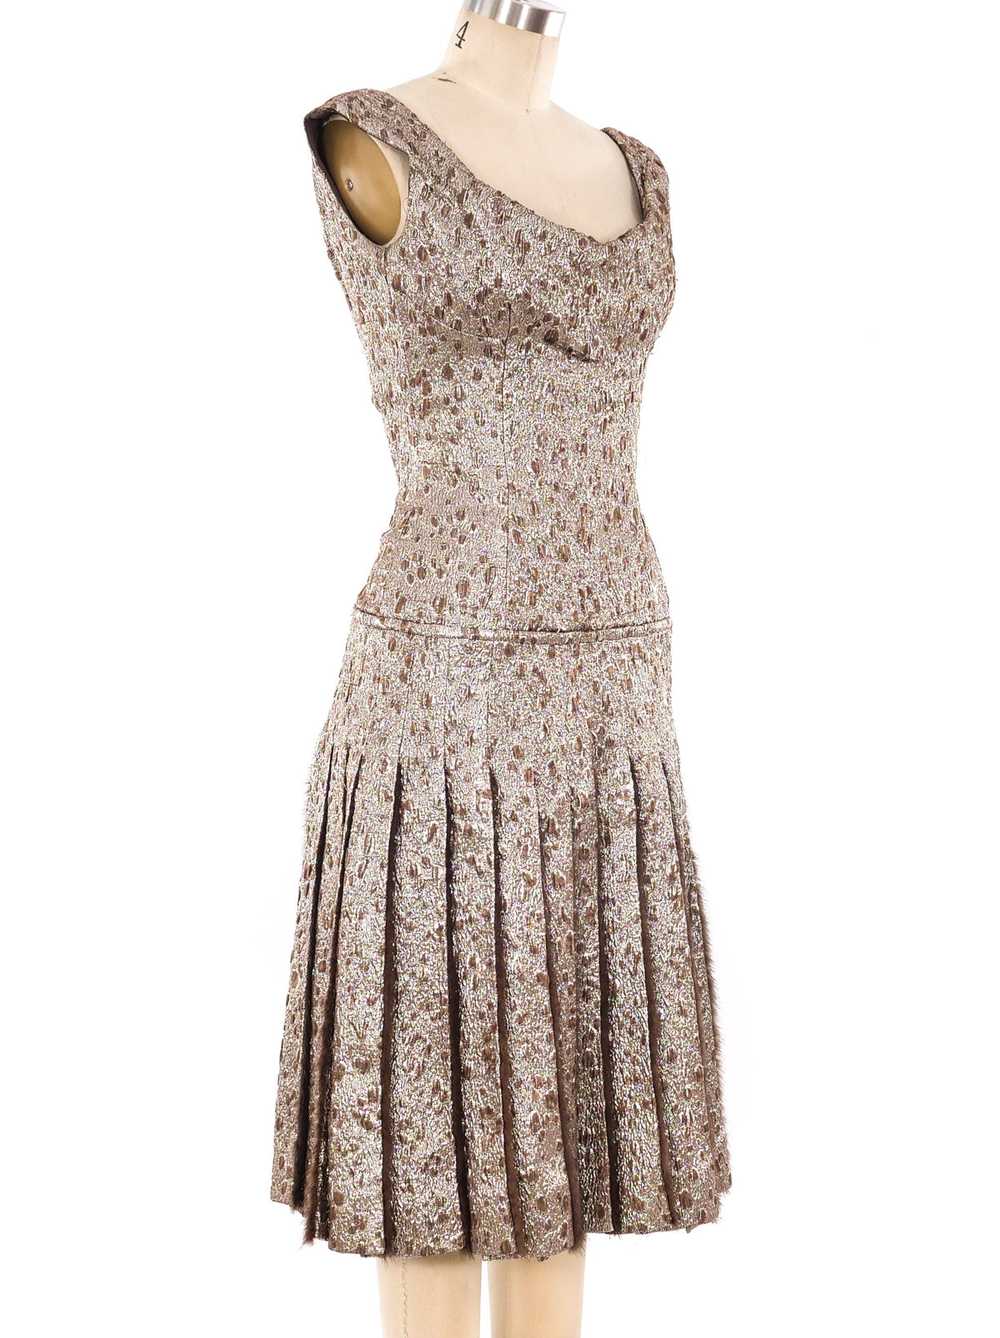 Fur Trimmed Metallic Brocade Dress - image 3